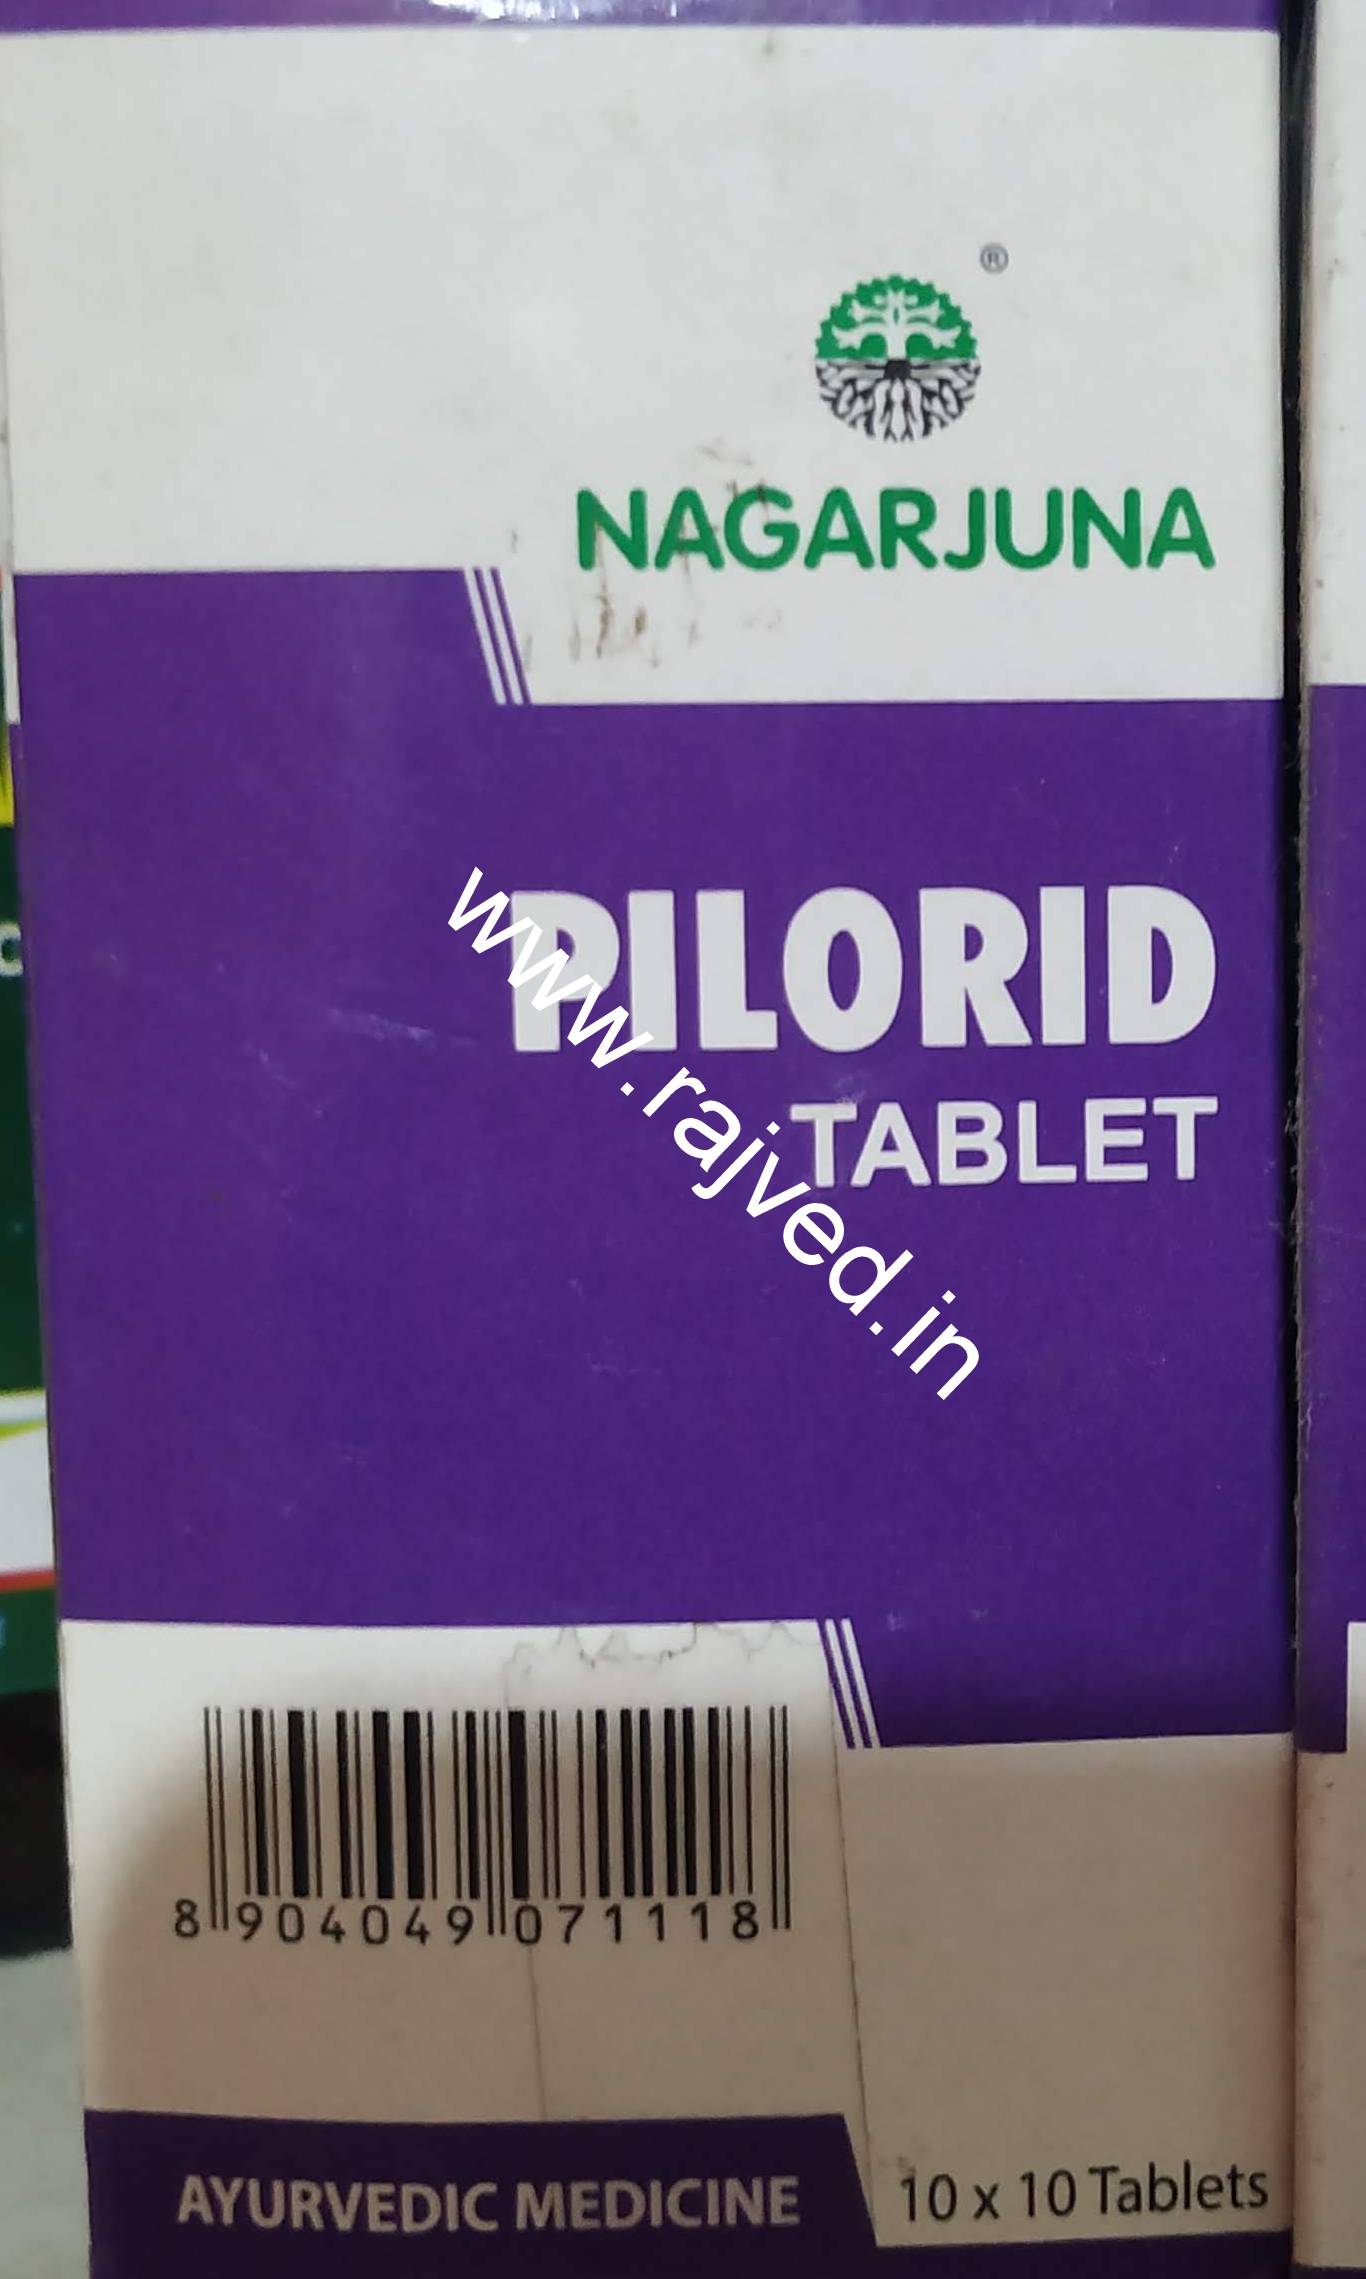 pilorid tablet 100 tablets-nagarjuna kerala